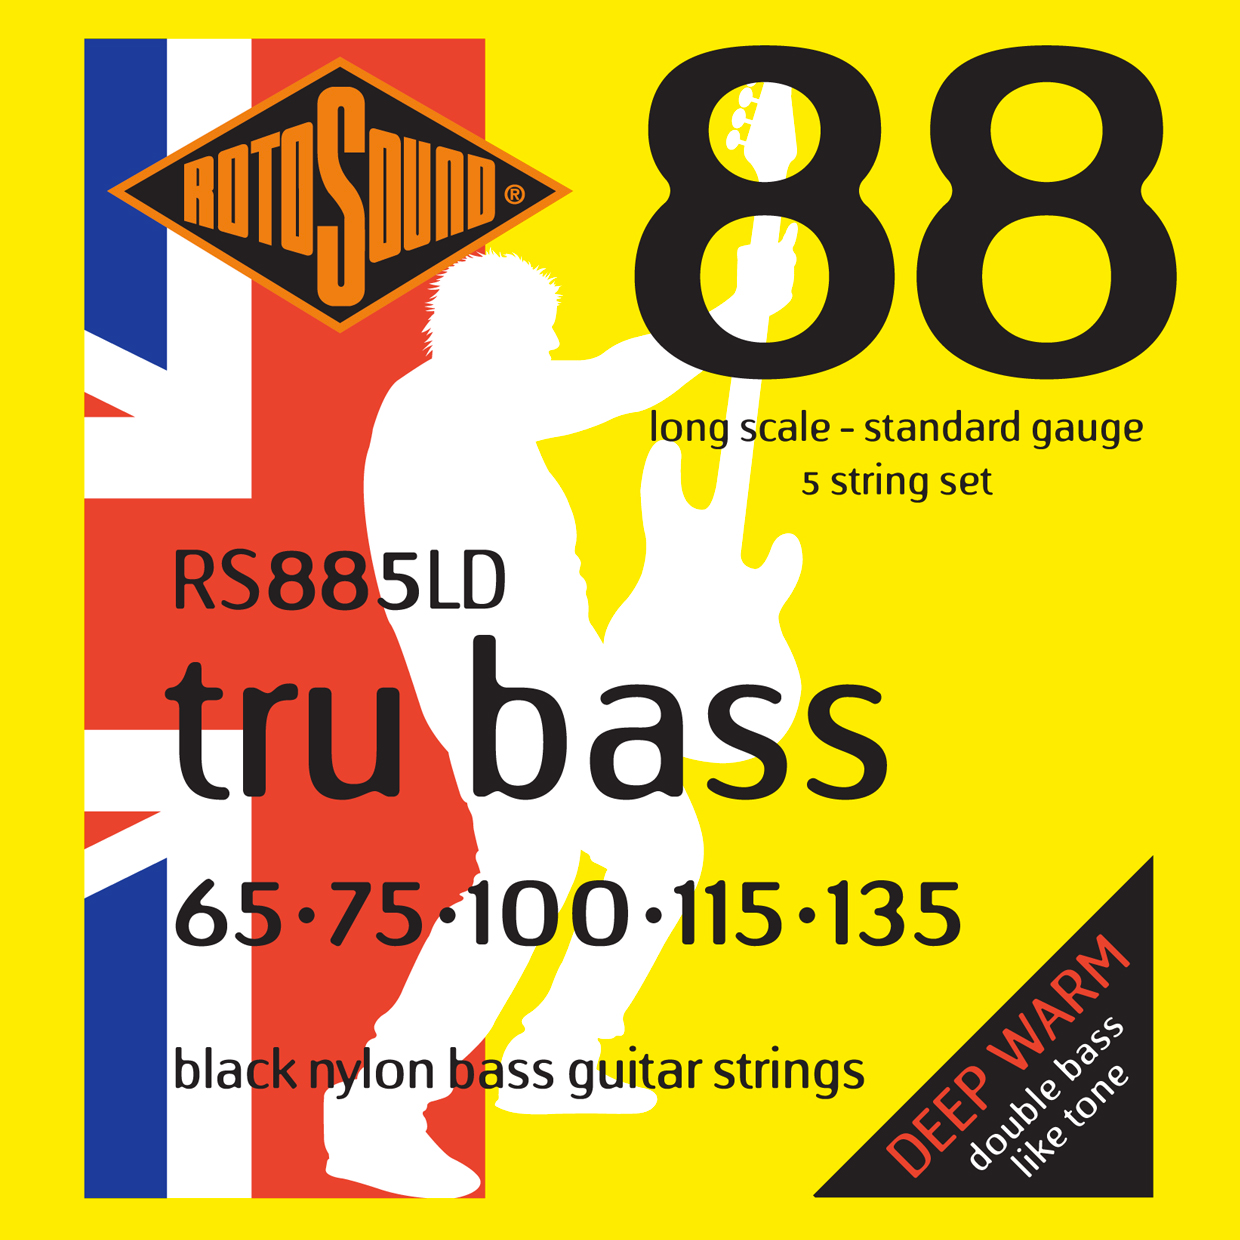 Cordes - CORDES GUITARES BASSES - 5 CORDES - ROTOSOUND - ROTRS885LD - Royez Musik